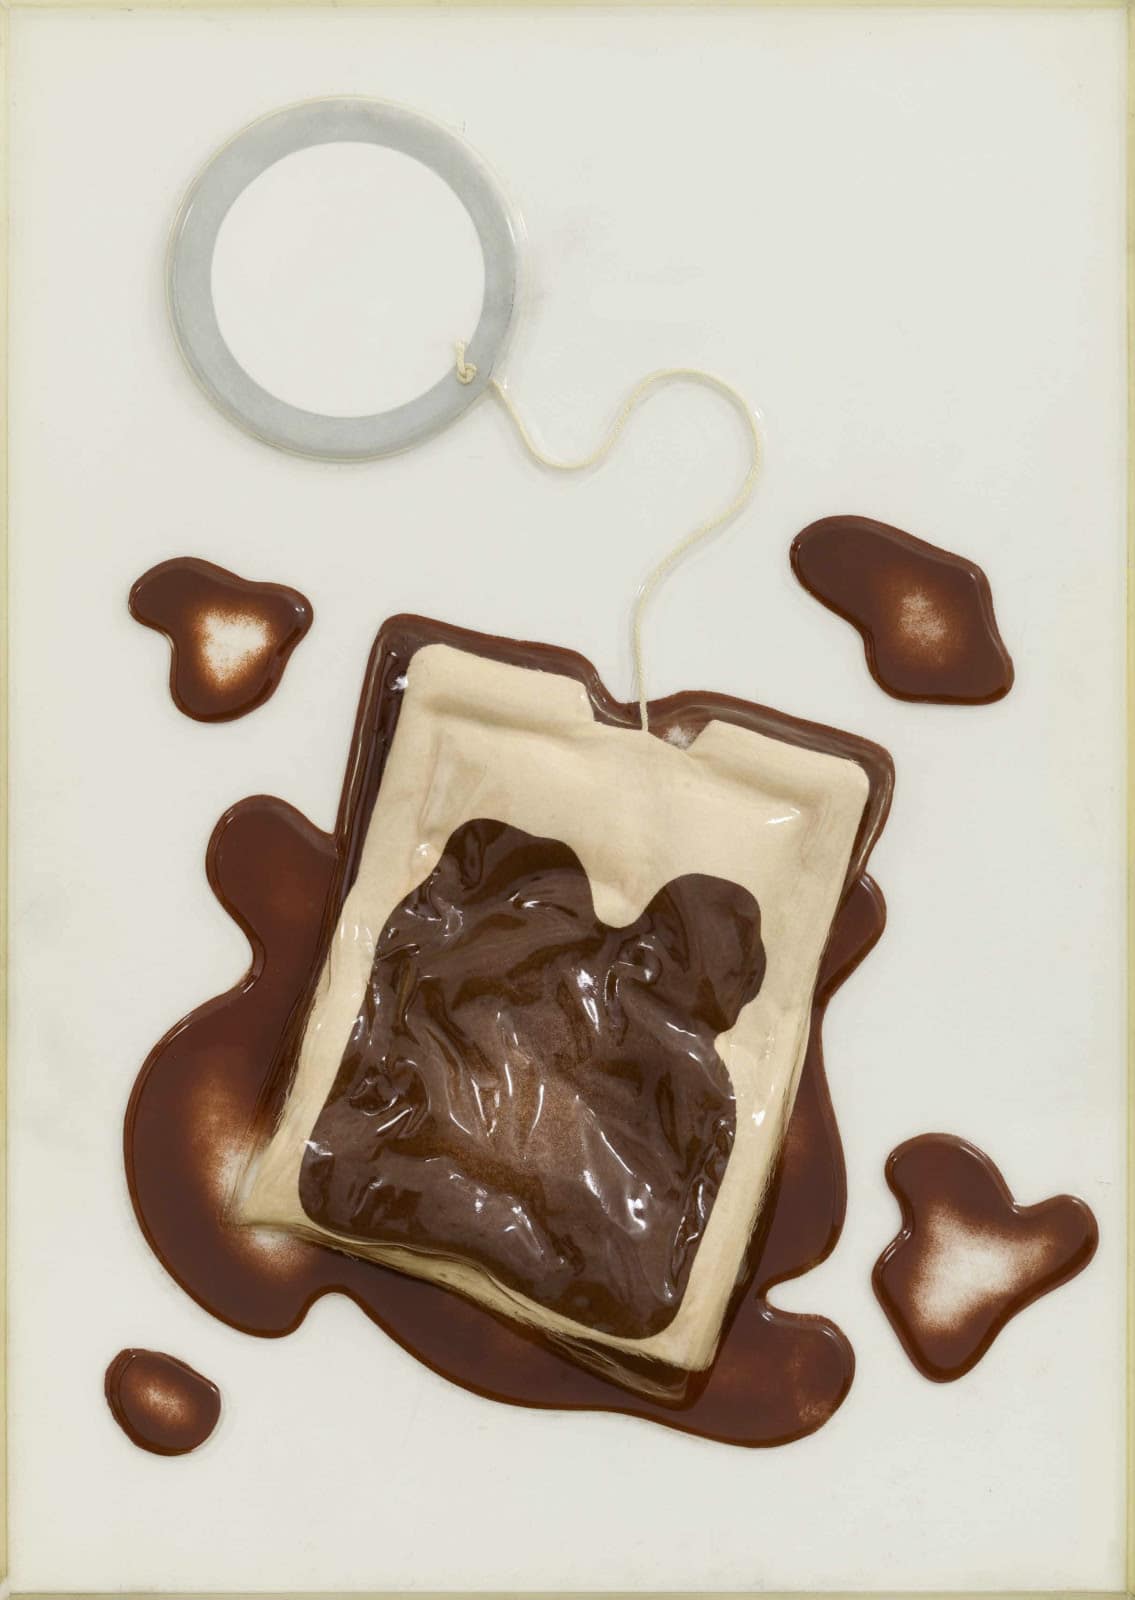 Claes Oldenburg, Tea Bag, 1966. From the portfolio “Four on Plexiglas”. Laminated vacuum-formed vinyl, screenprint on vinyl, felt, acrylic, rayon cord. 39 x 28 x 31/2 in. (99.1 x 71.1 x 8.9 cm). Edition of 125. Published by Multiples, Inc. © 1966 Claes Oldenburg.